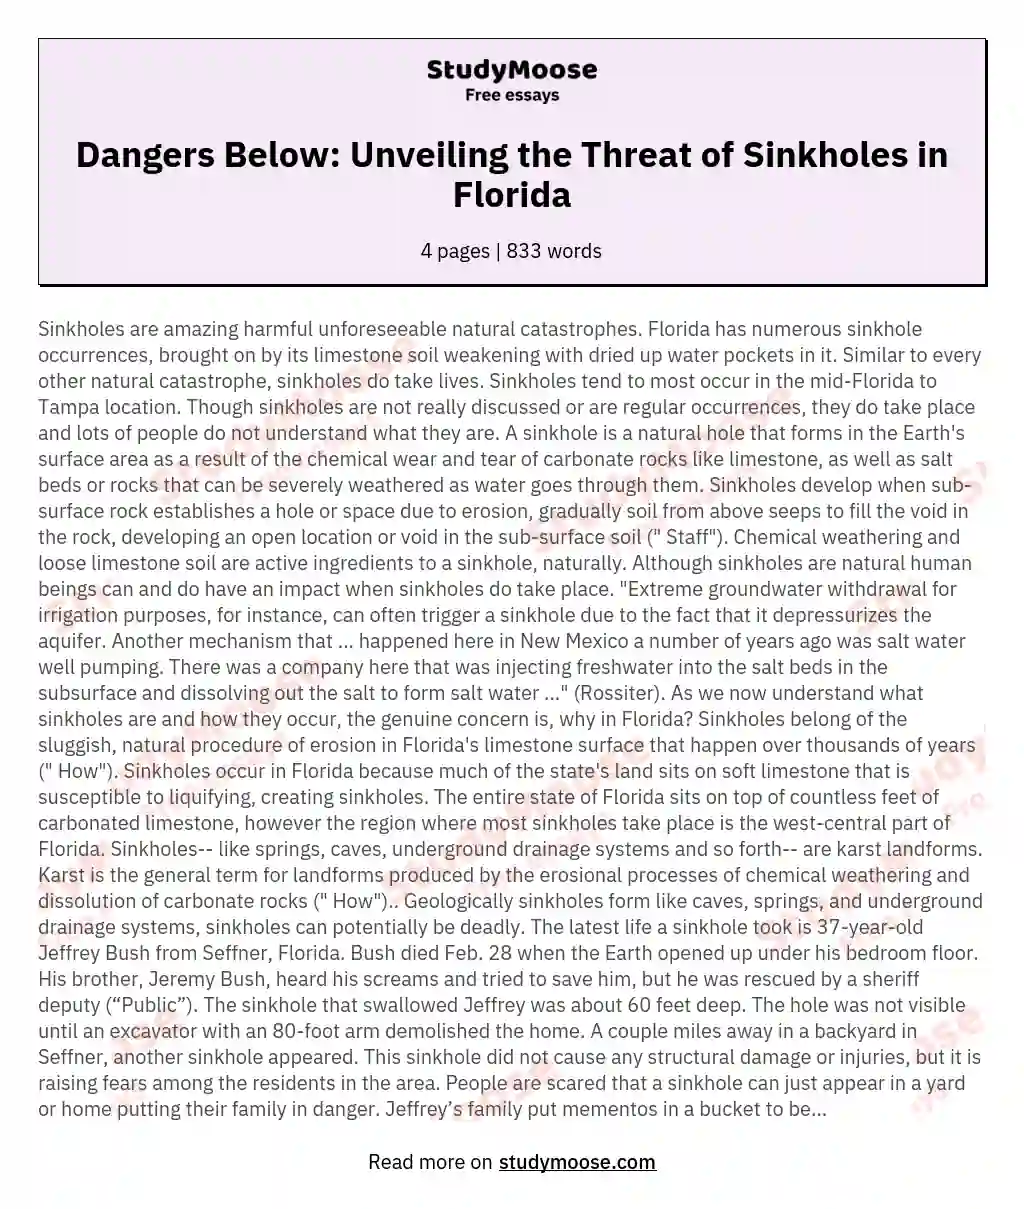 Dangers Below: Unveiling the Threat of Sinkholes in Florida essay